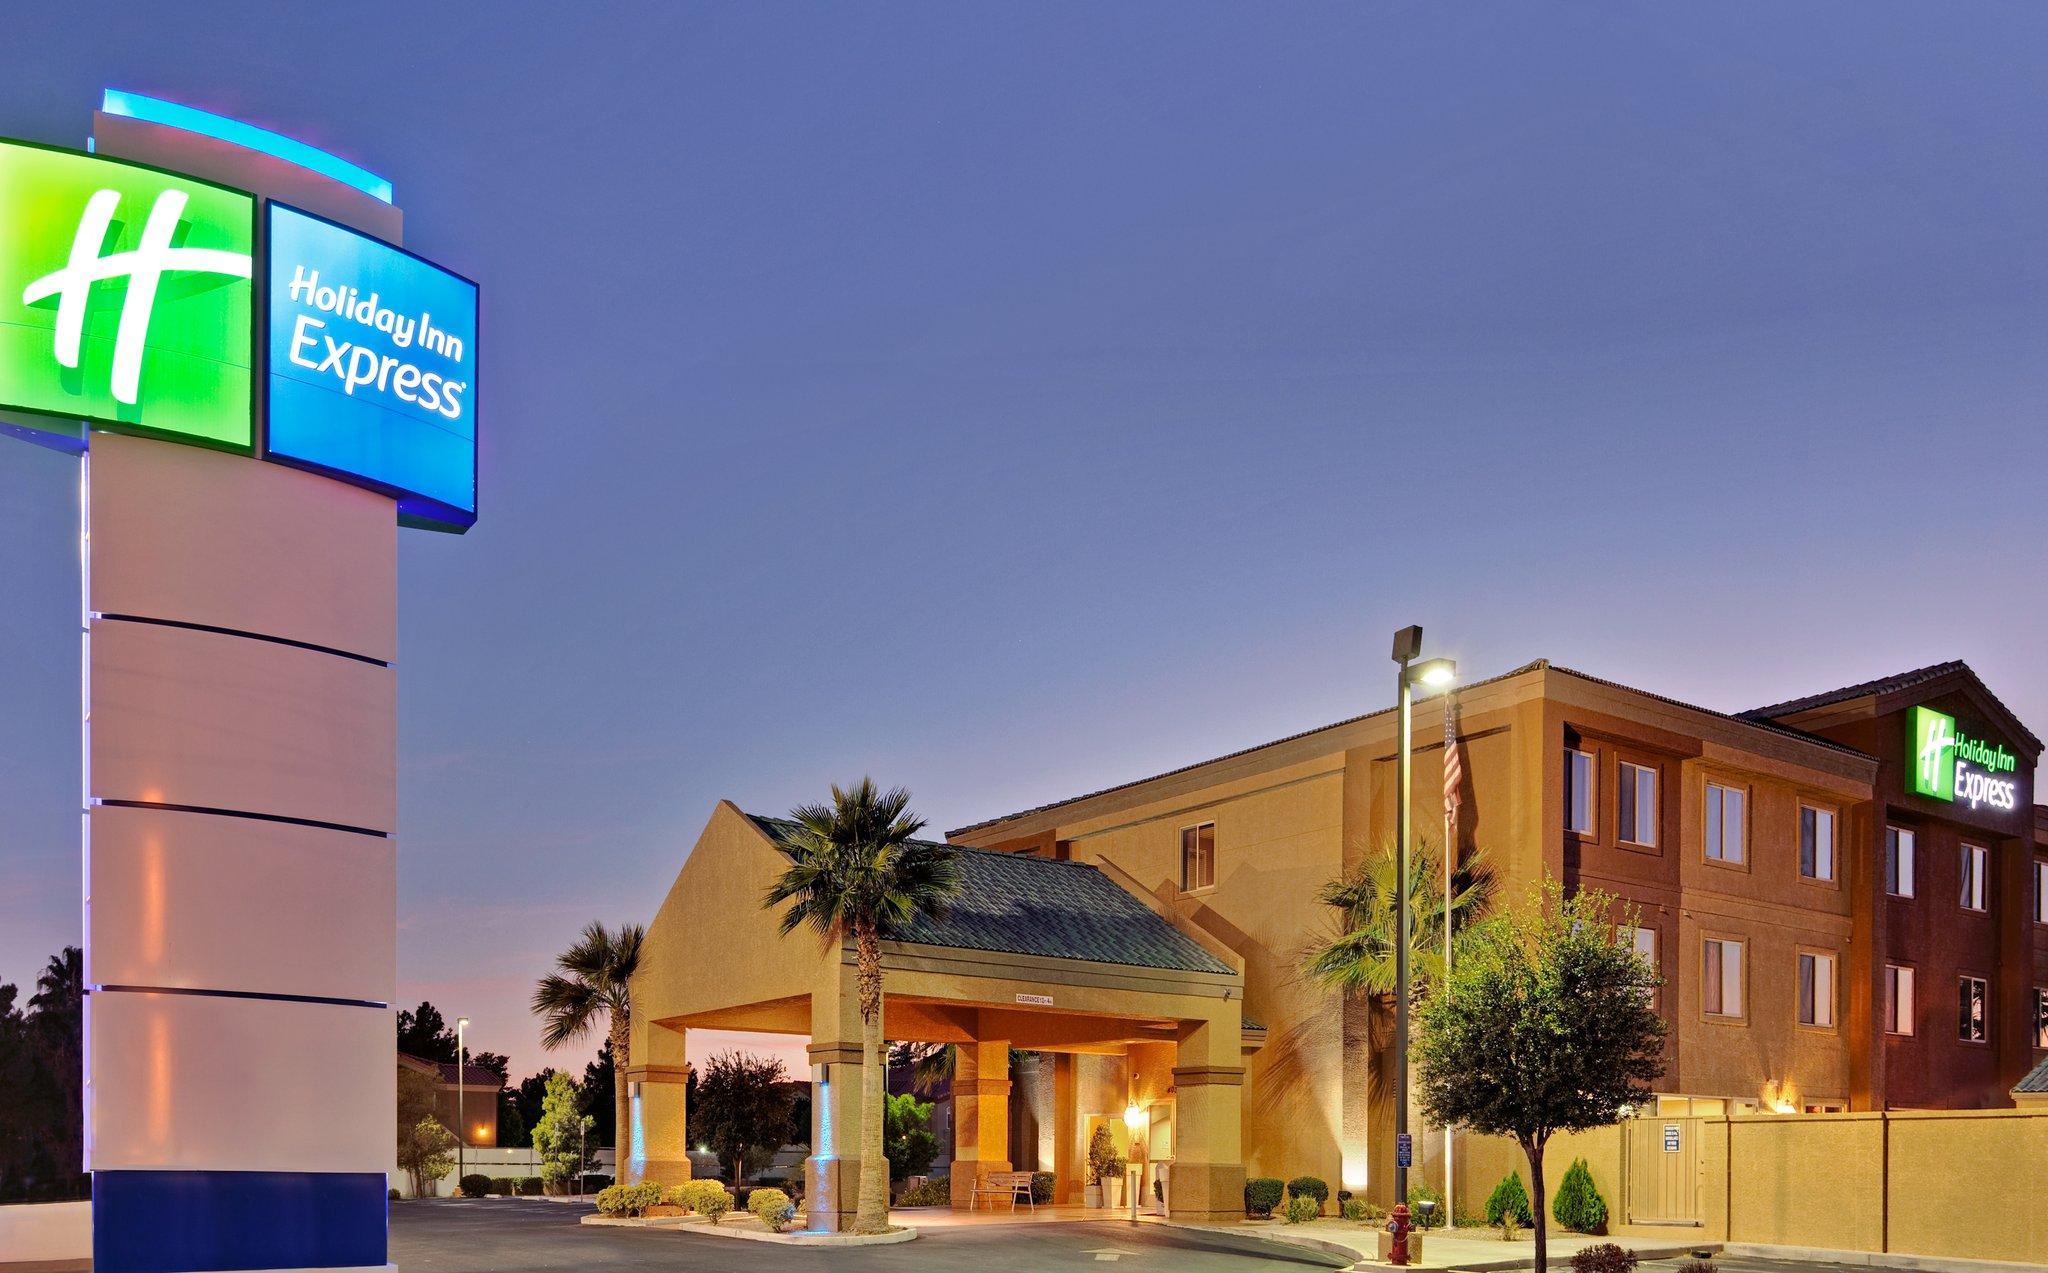 Holiday Inn Express Las Vegas-Nellis in Las Vegas, NV